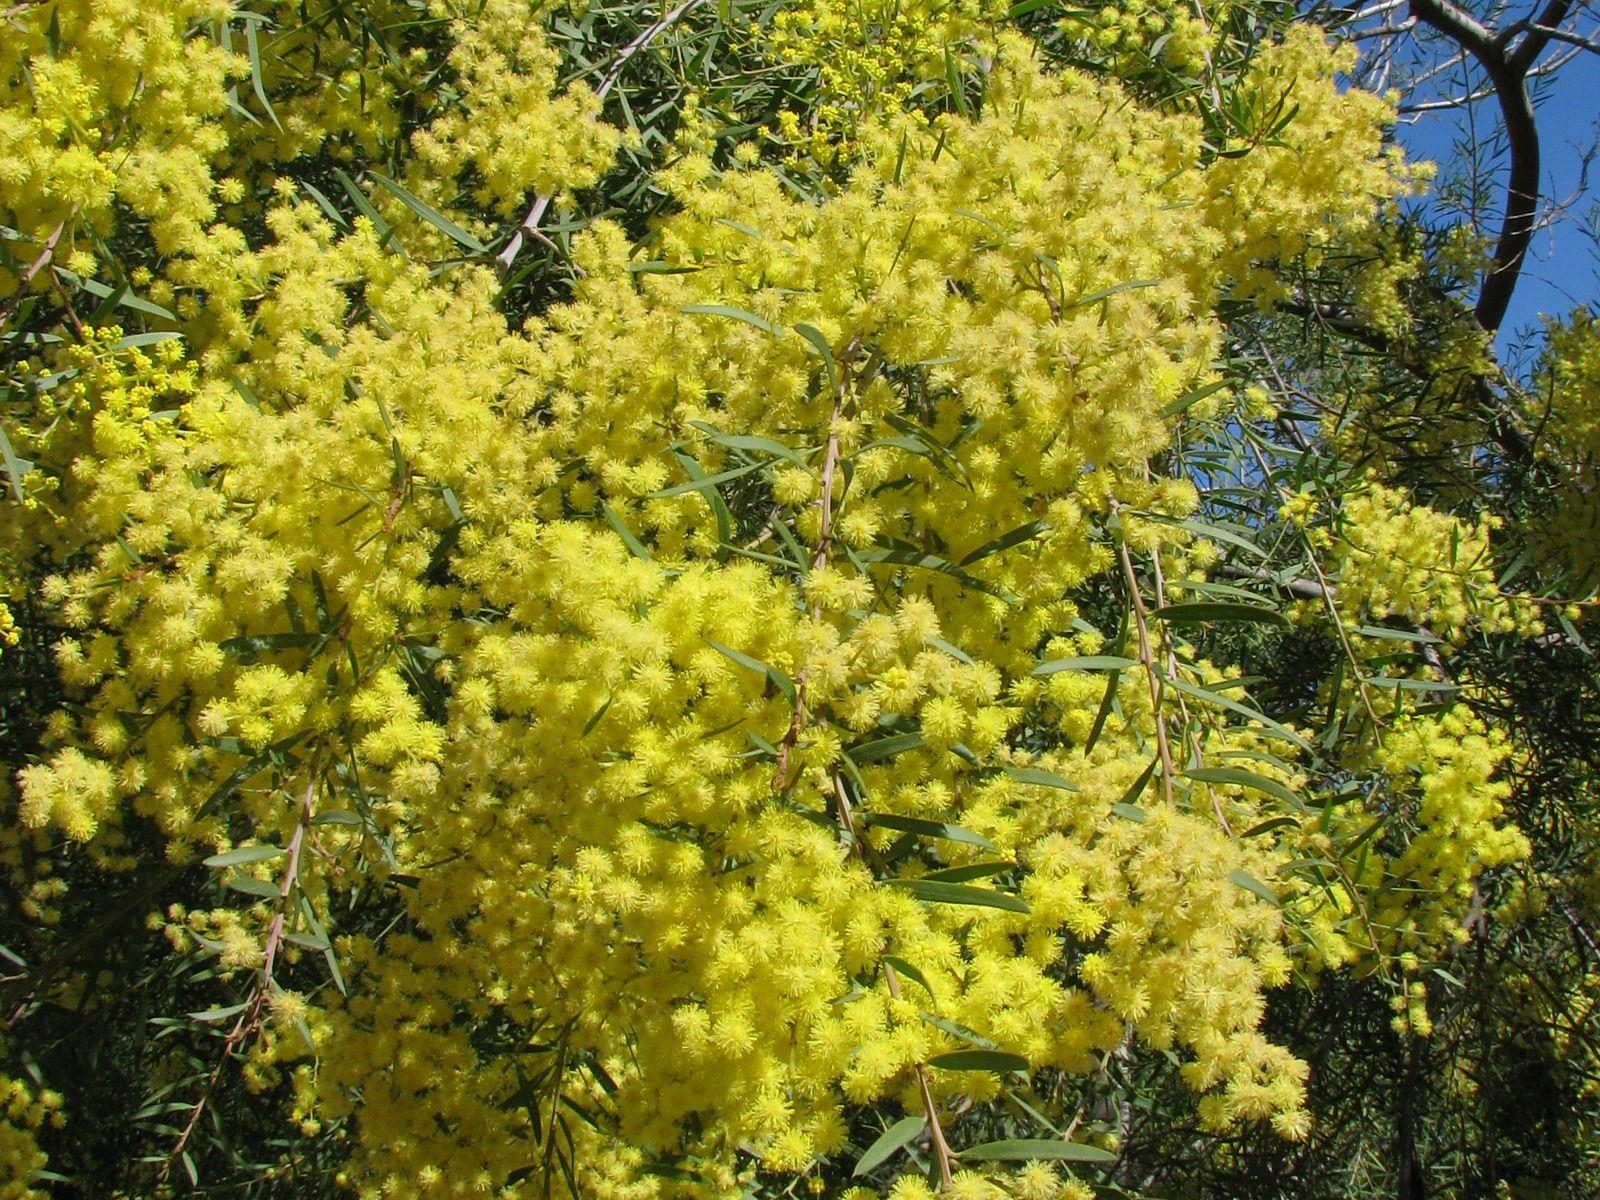 Acacia aulacocarpa var. macrocarpa - Black Wattle, Brown Salwood, שיטה מחורצת, שיטה מחורצת